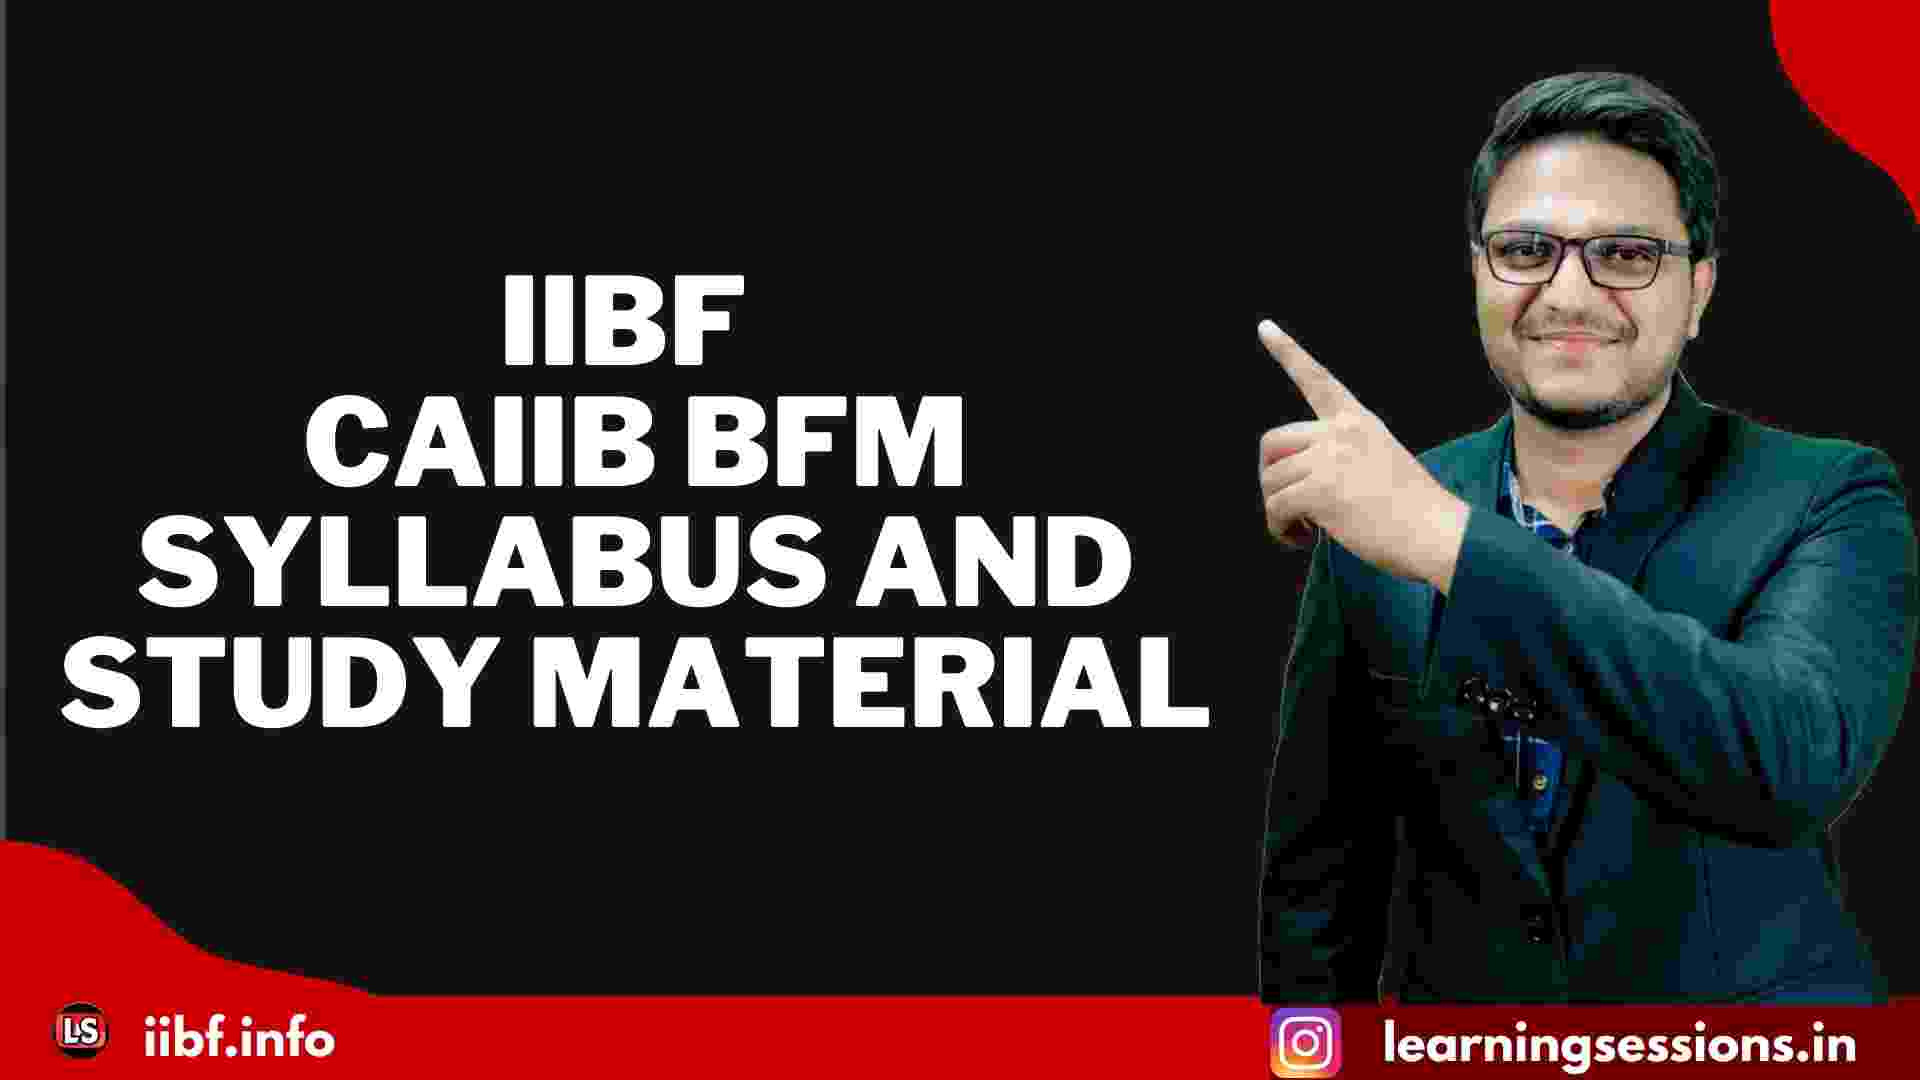 IIBF CAIIB BFM SYLLABUS AND STUDY MATERIAL 2022